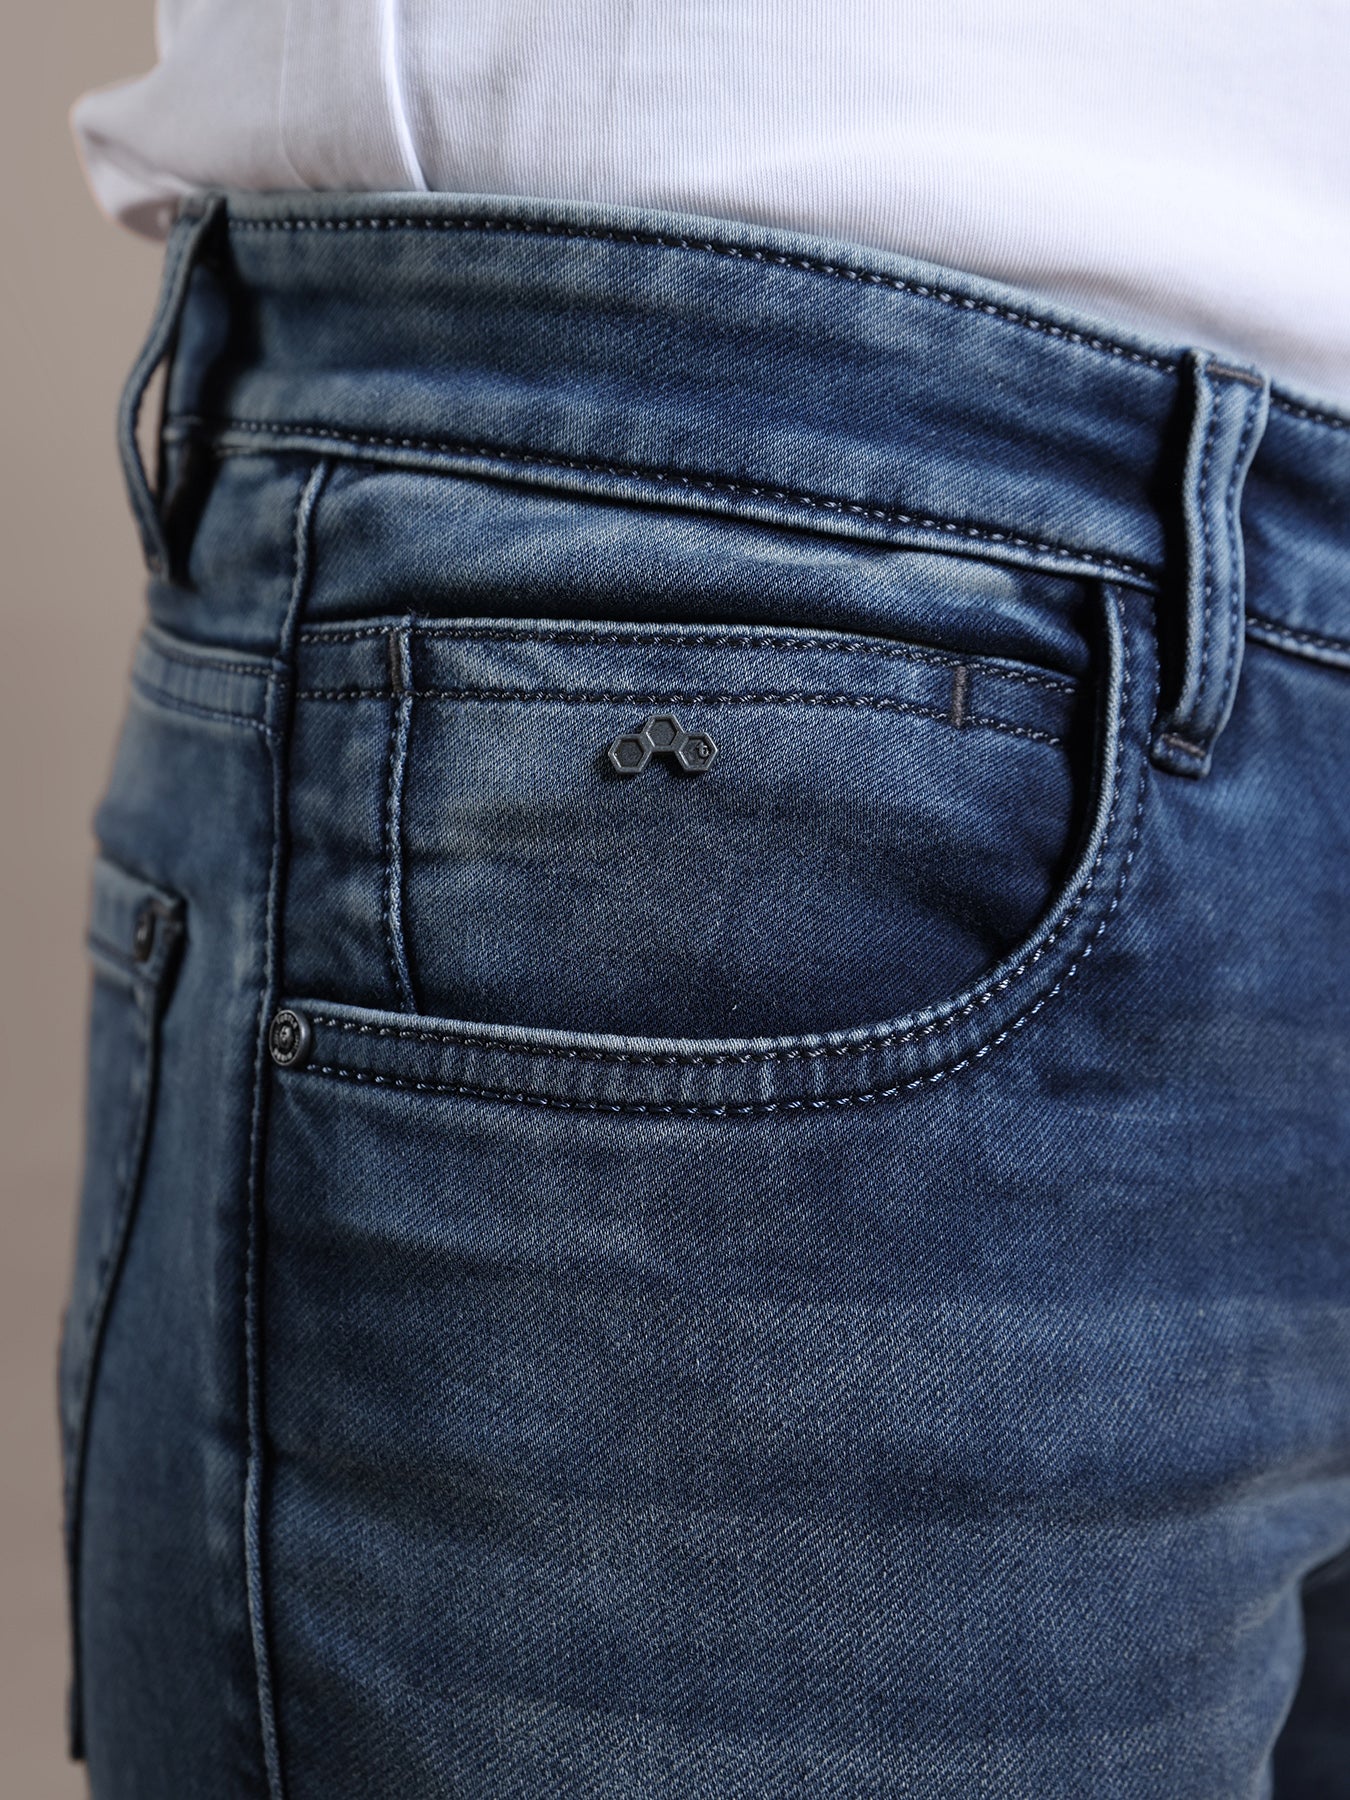 Cotton Stretch Blue Plain Narrow Fit Flat Front Casual Jeans